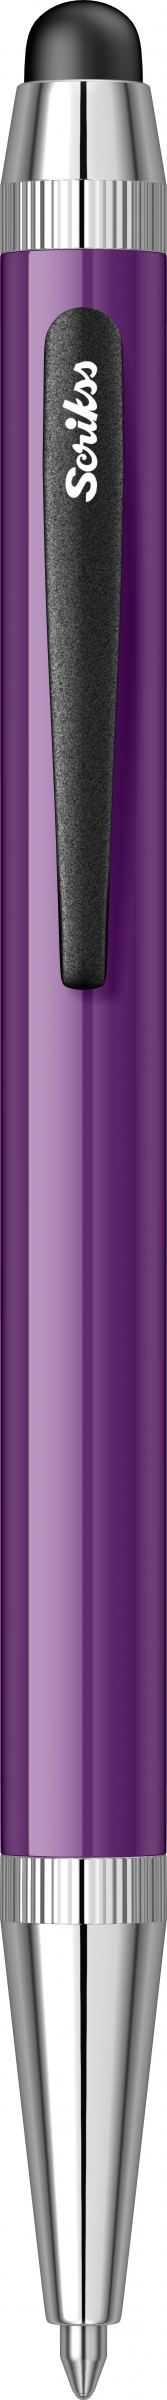 Purple CT